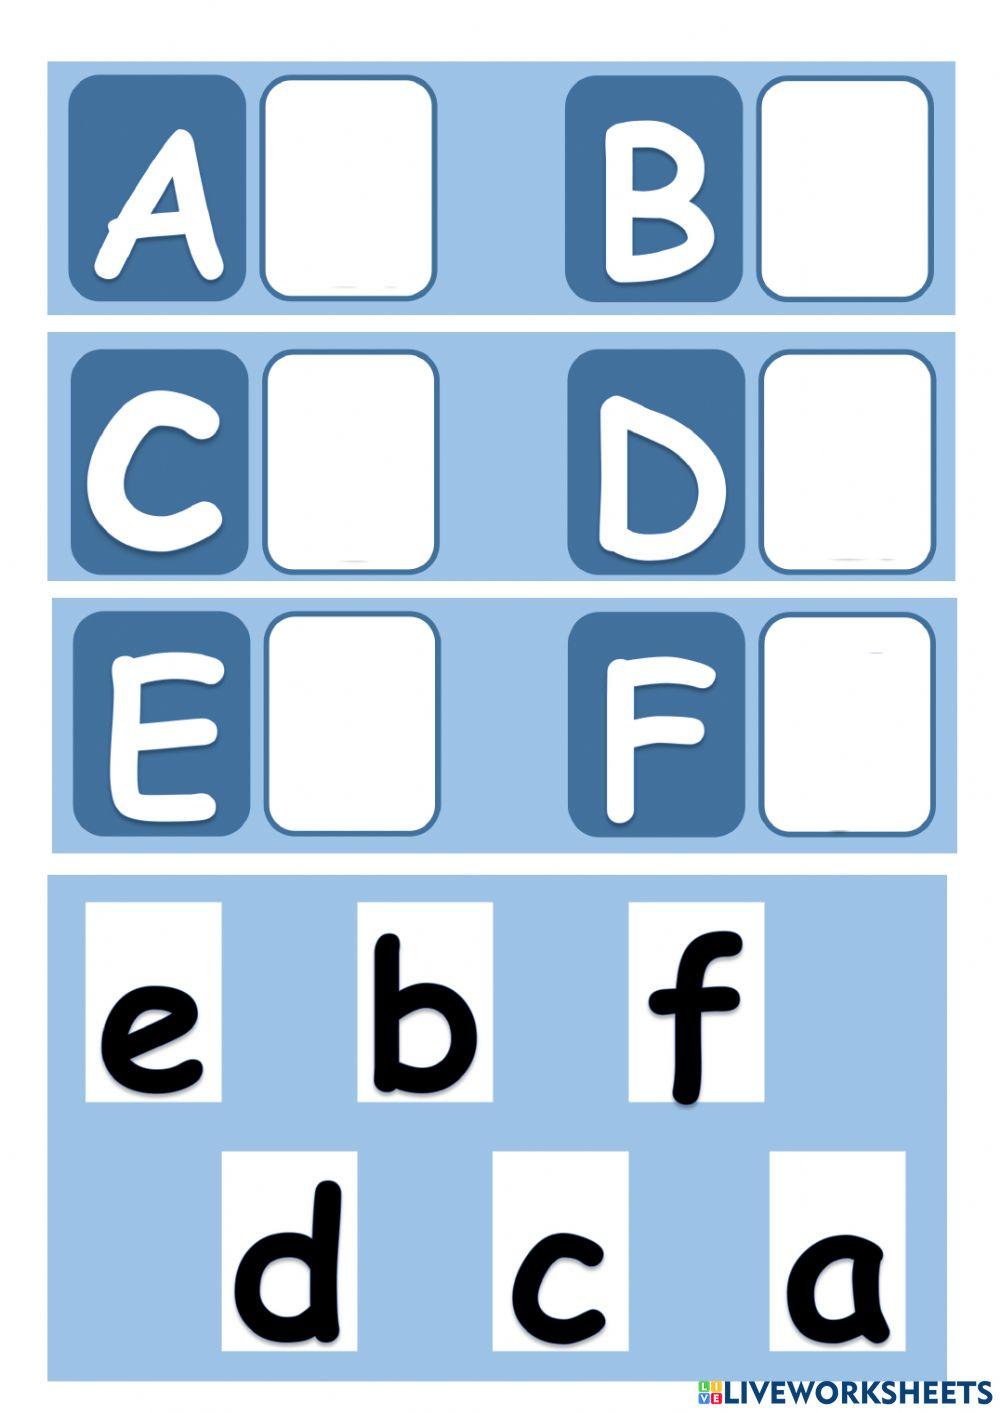 Alphabet matching